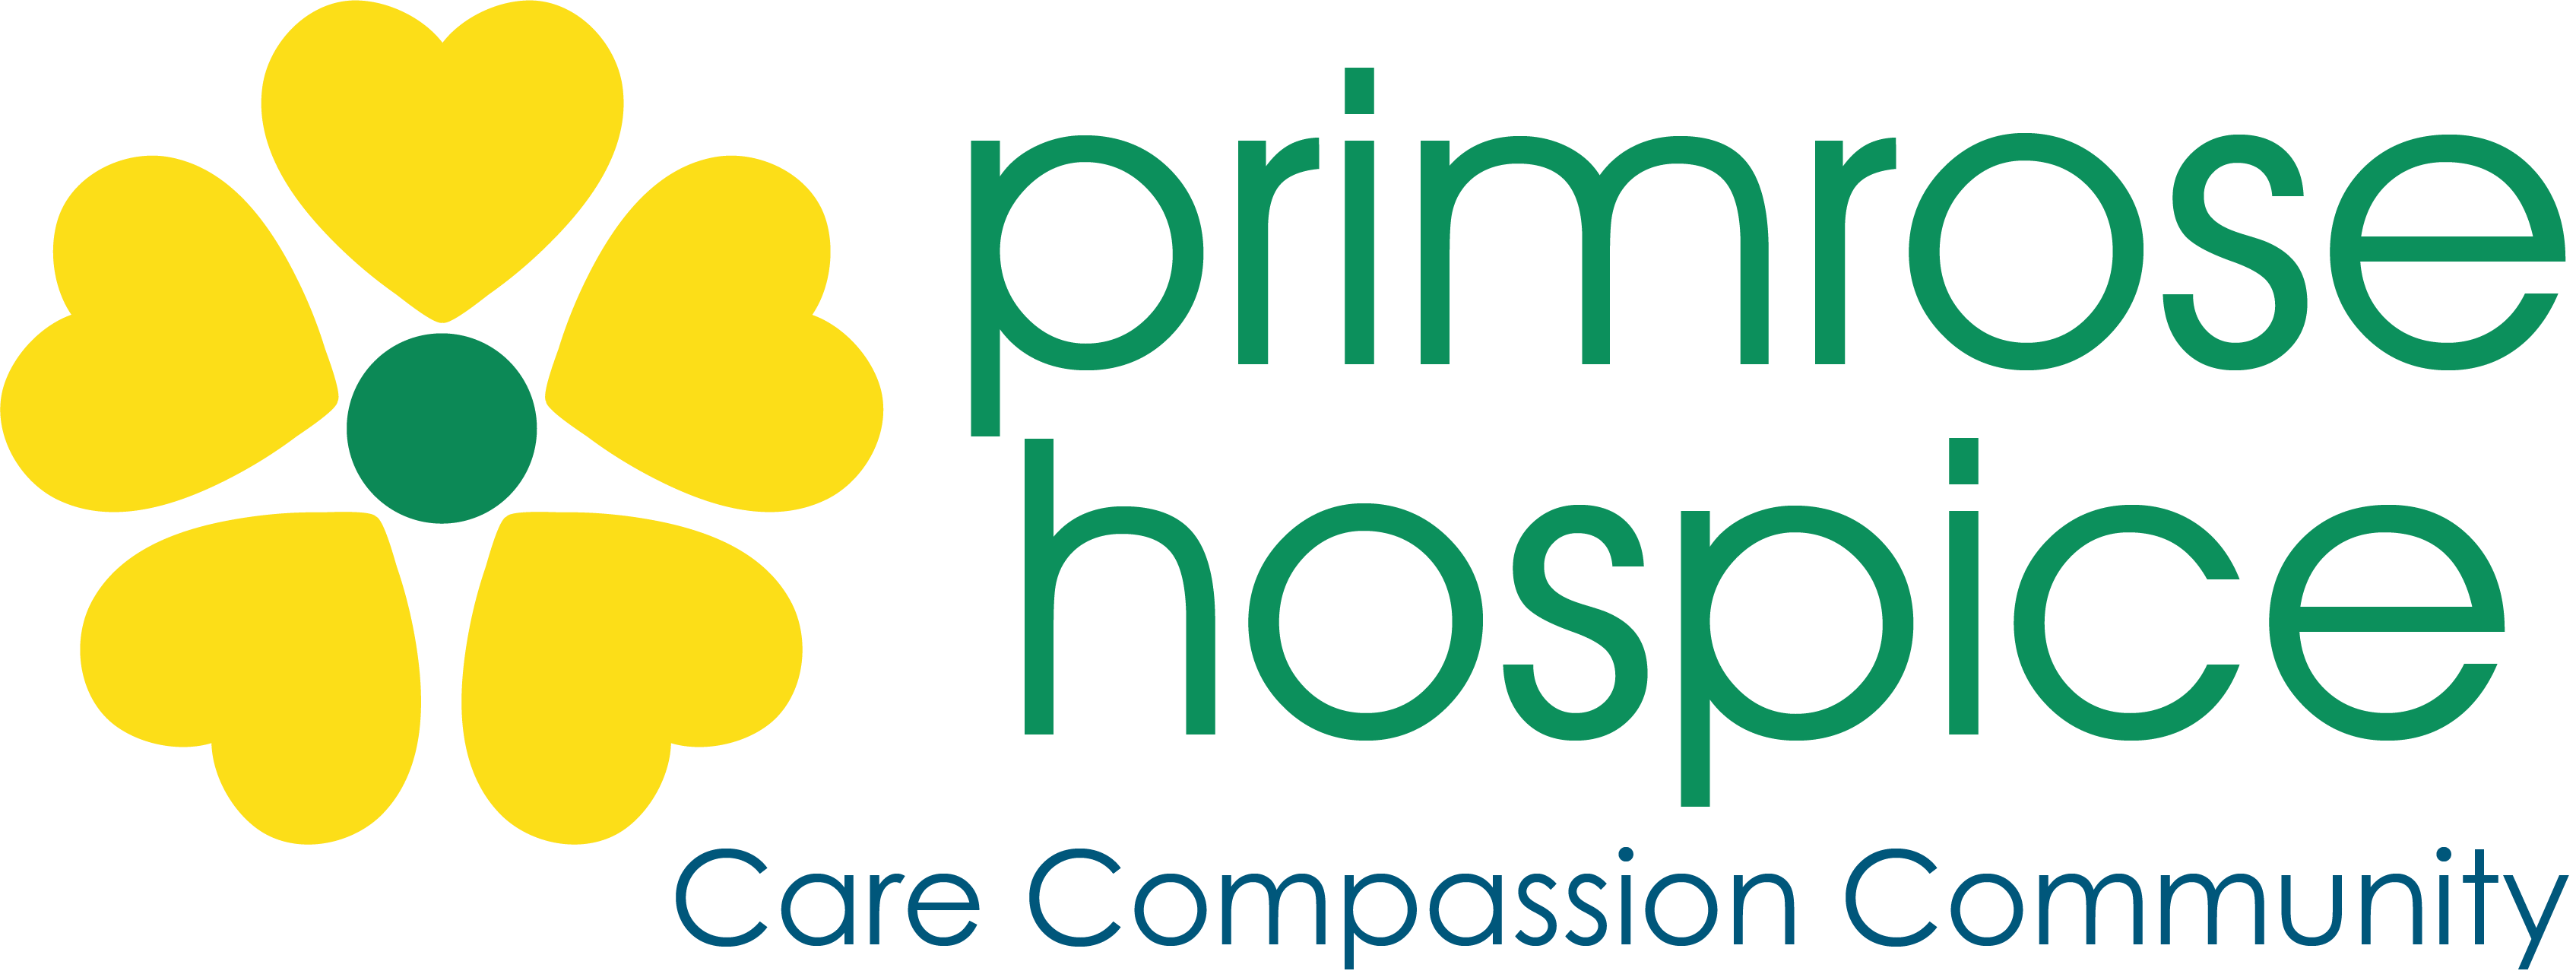 Primrose logo strapline